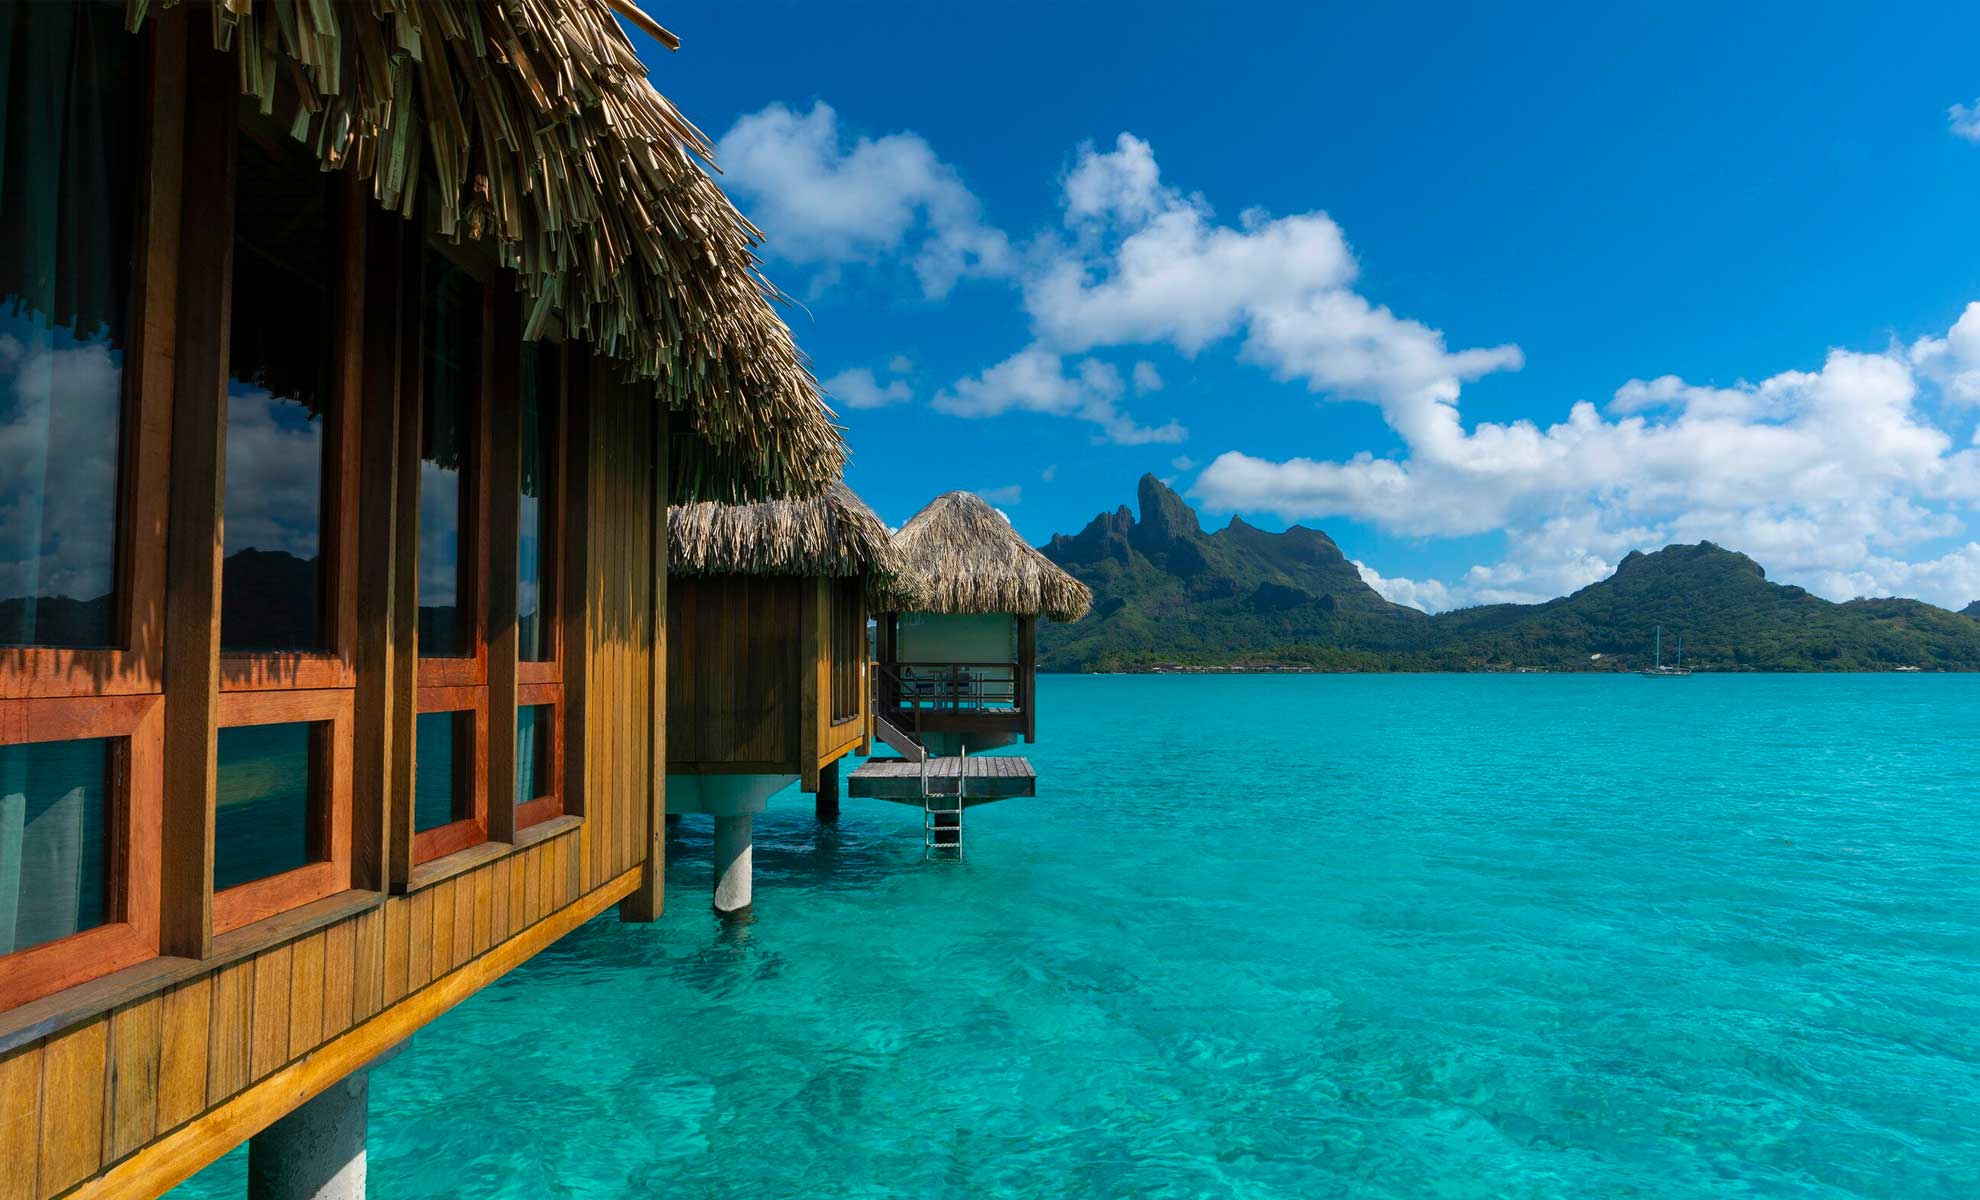 The St. Regis Bora Bora Resort | Luxury Bora Bora Holiday | 5 star luxury